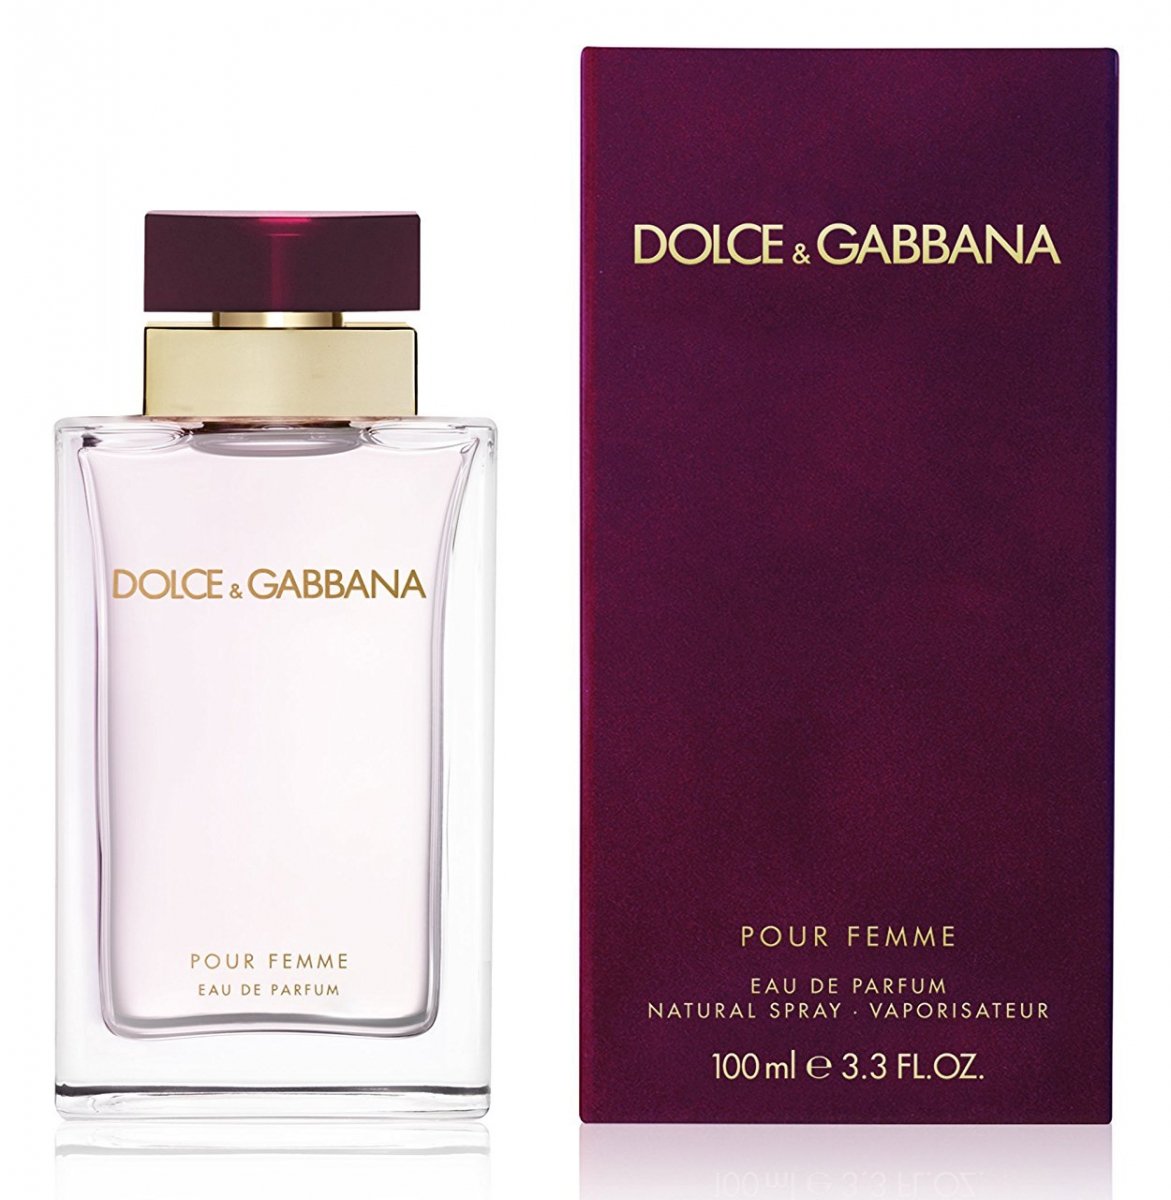 dolce and gabbana gardenia perfume